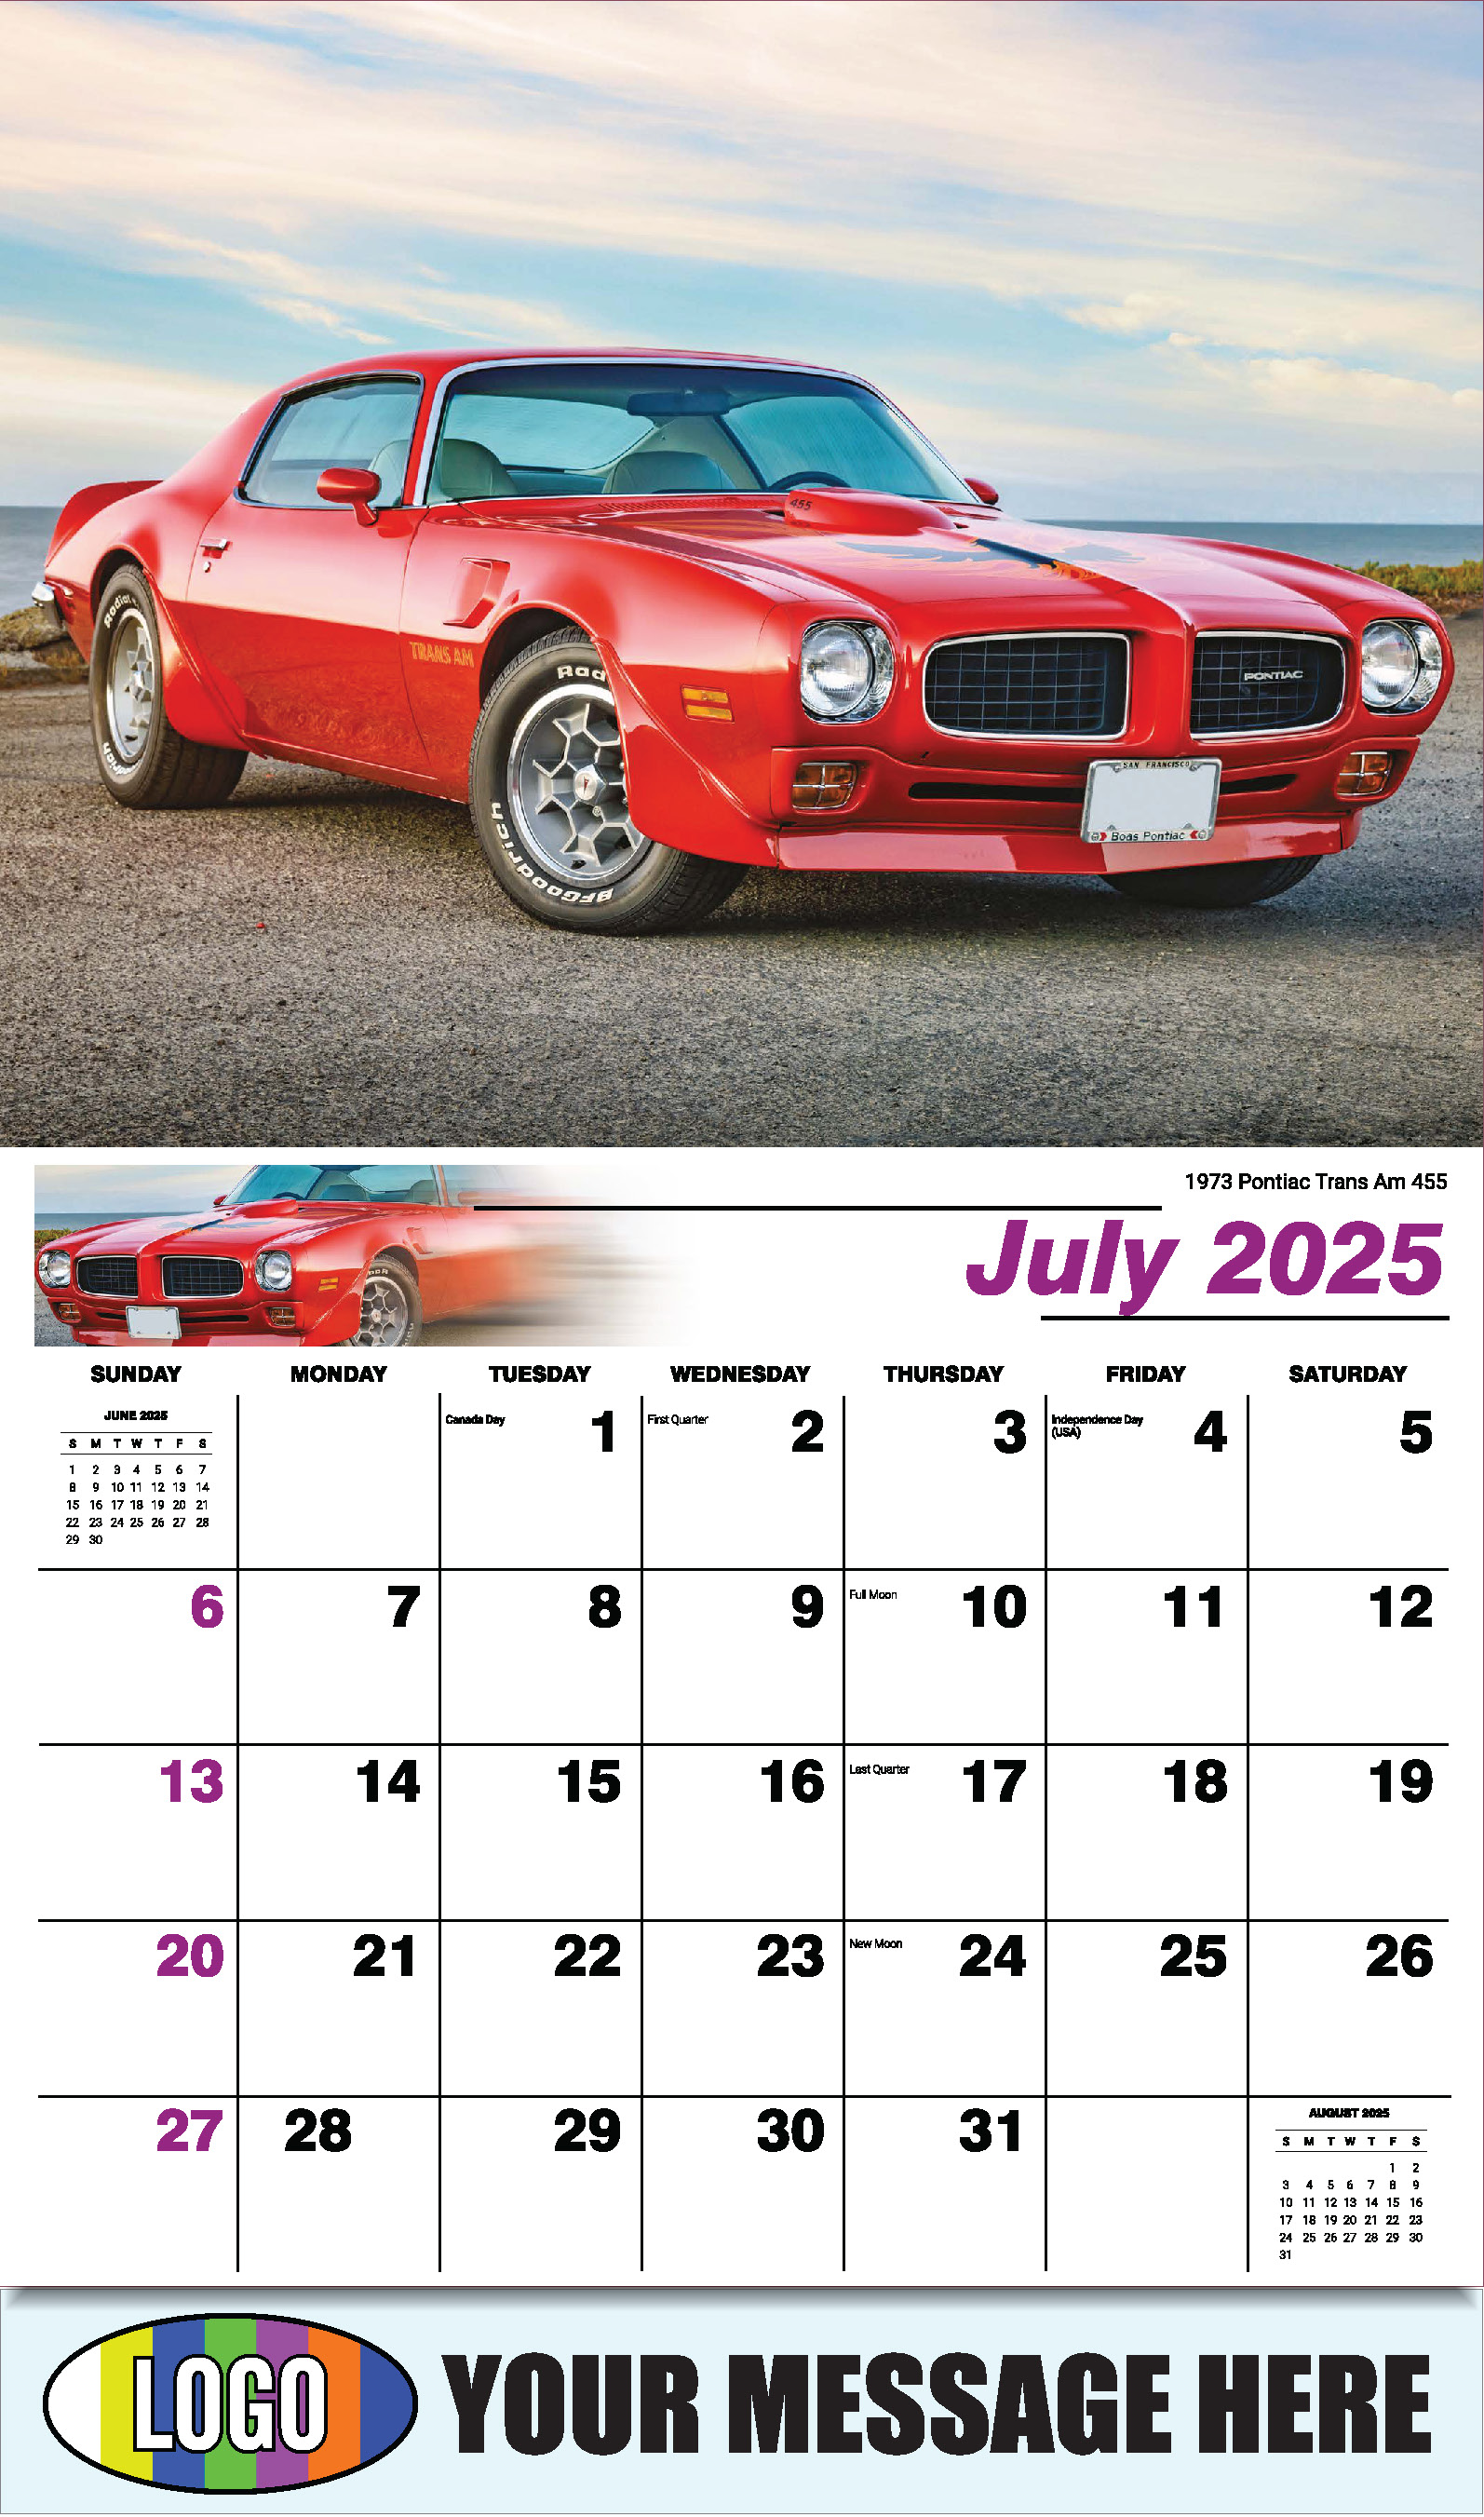 Classic Cars 2025 Automotive Business Promo Calendar - July